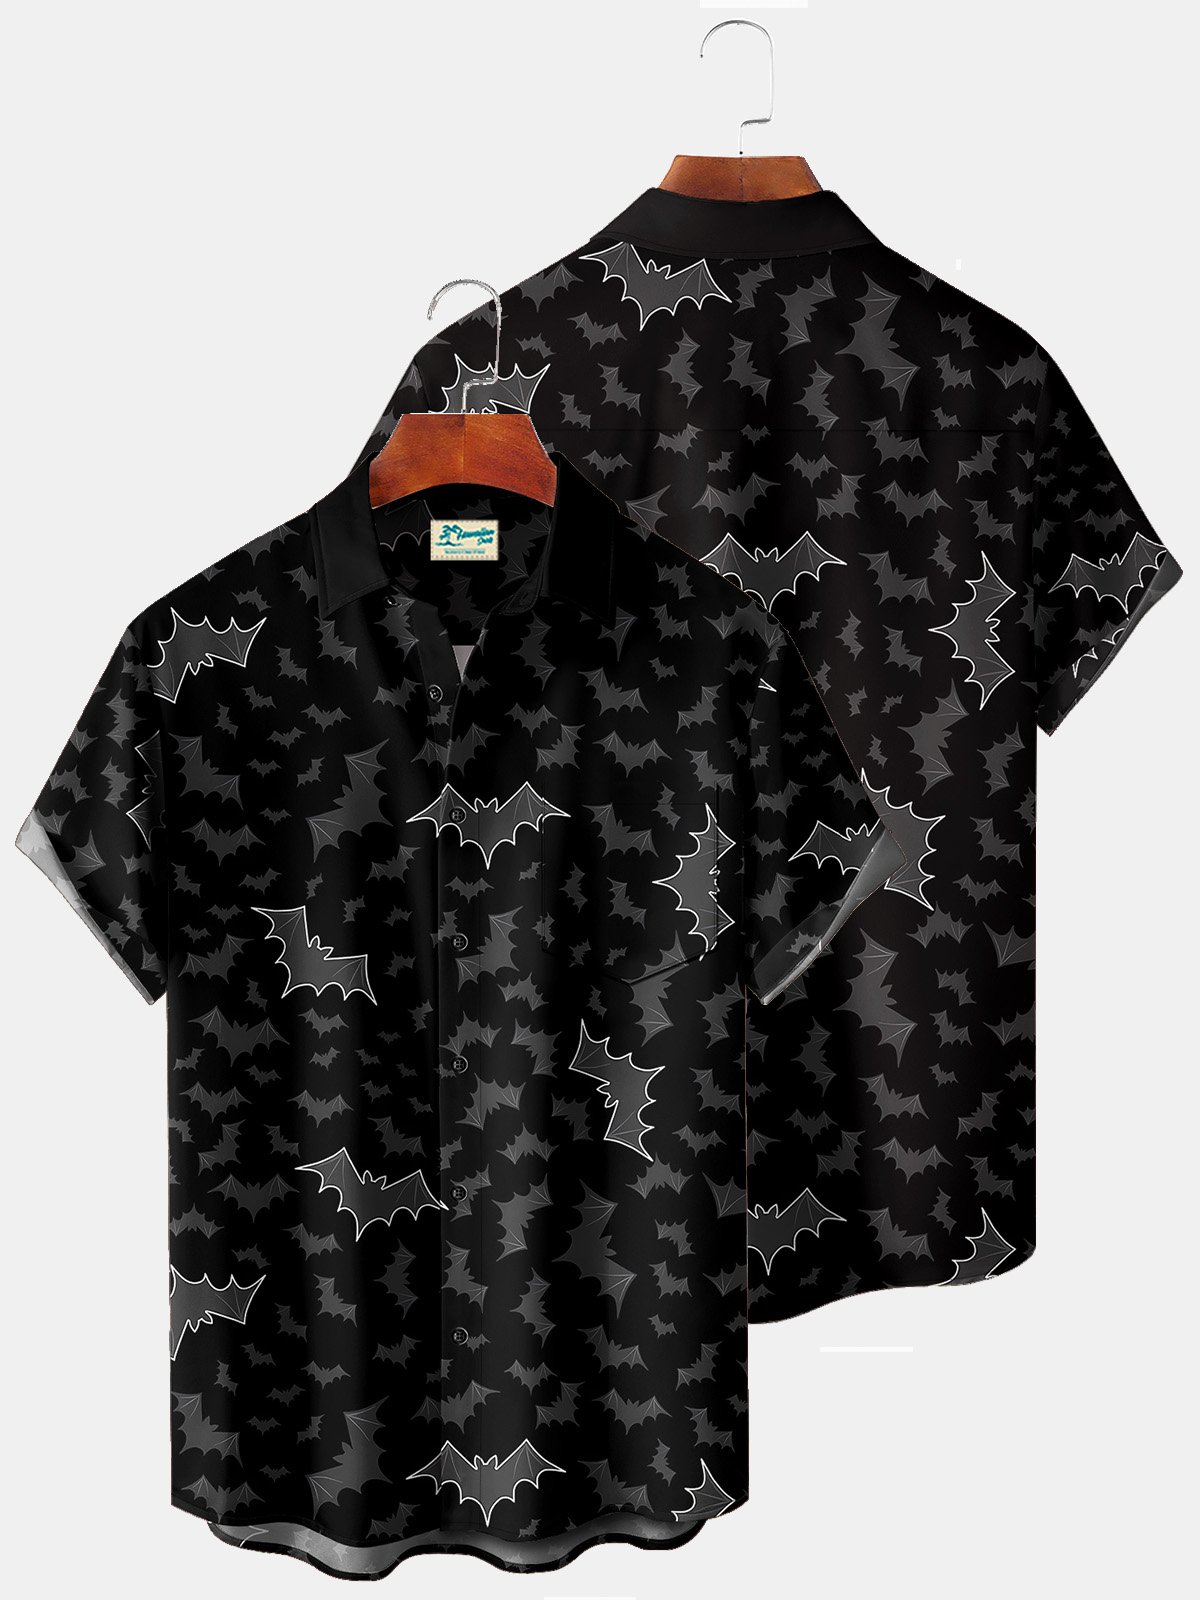 Royaura Vintage Halloween Holiday Men's Shirts Cartoon Bat Art Stretch Plus Size Aloha Camp Shirts